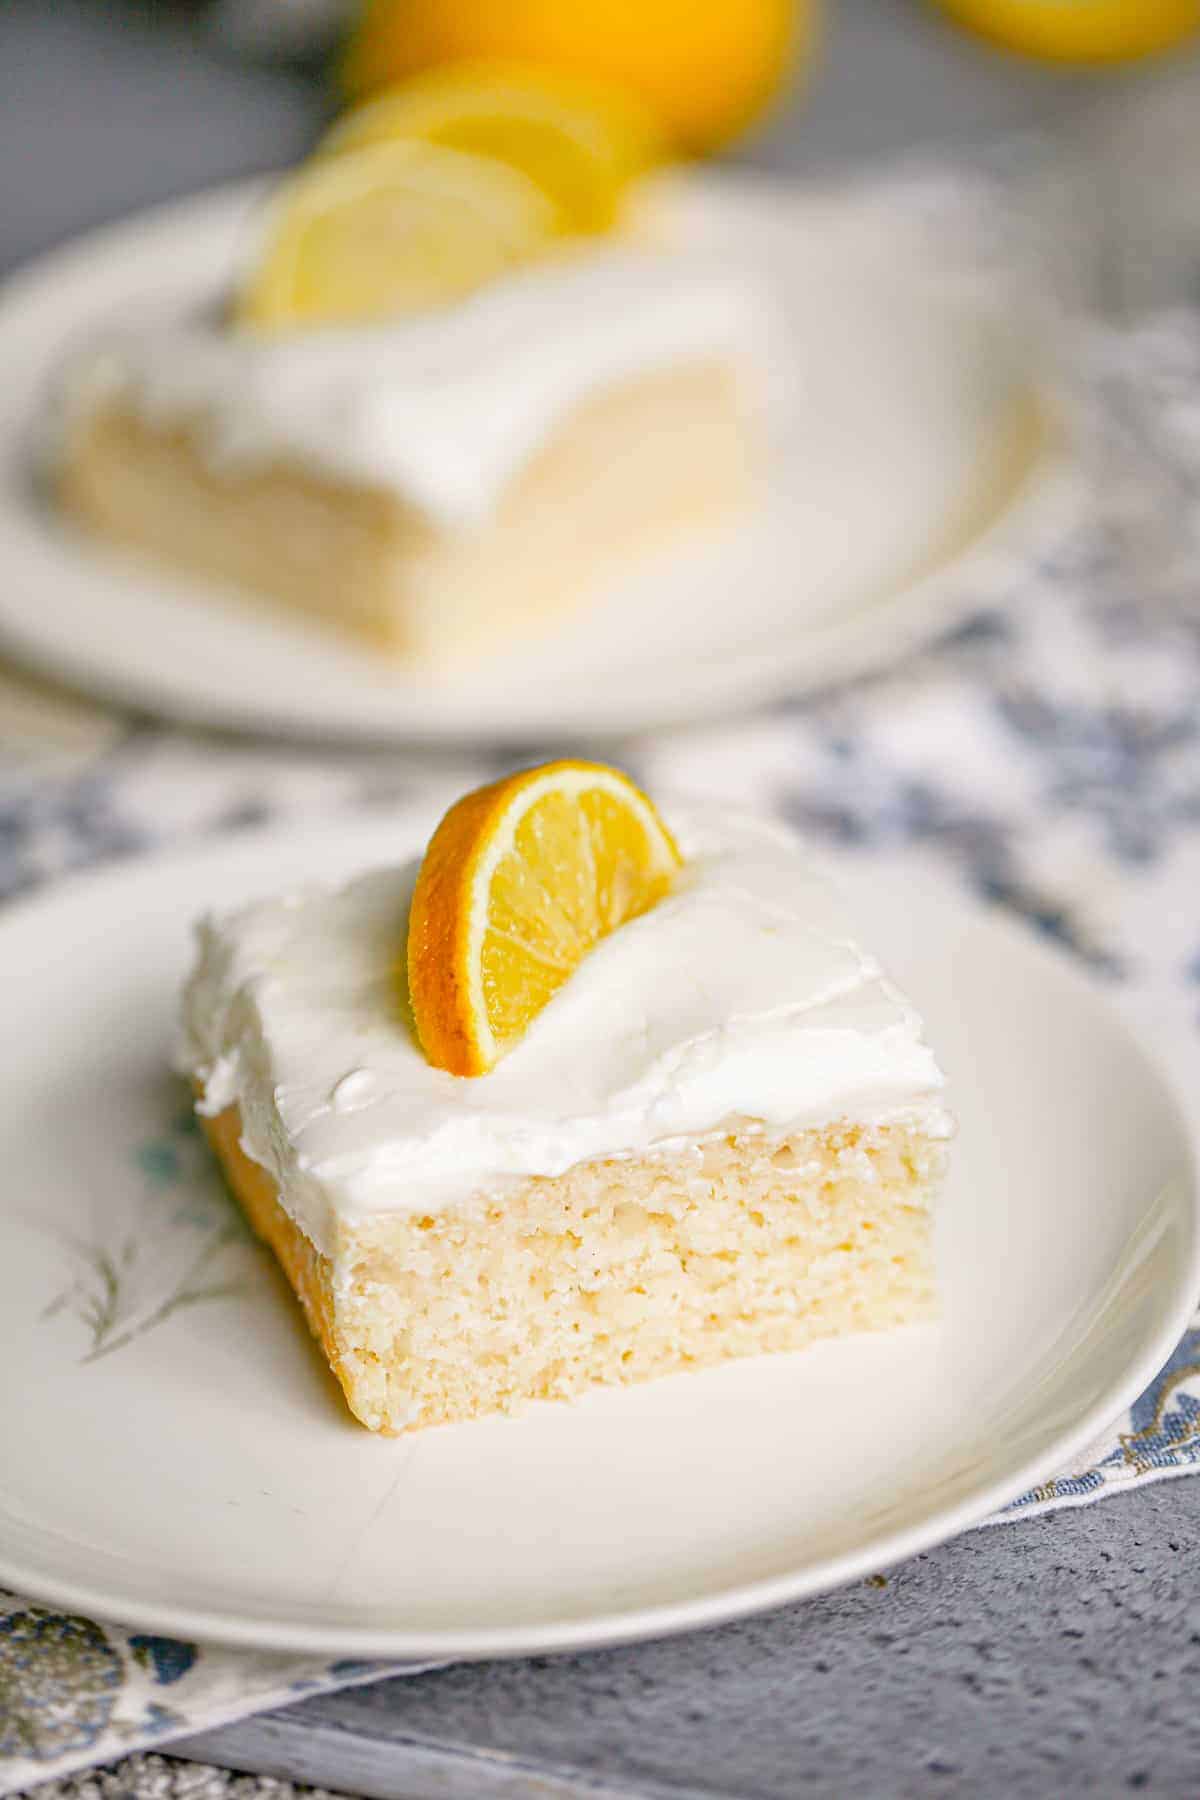 Lemon Cream Cheese Blondies dessert recipe